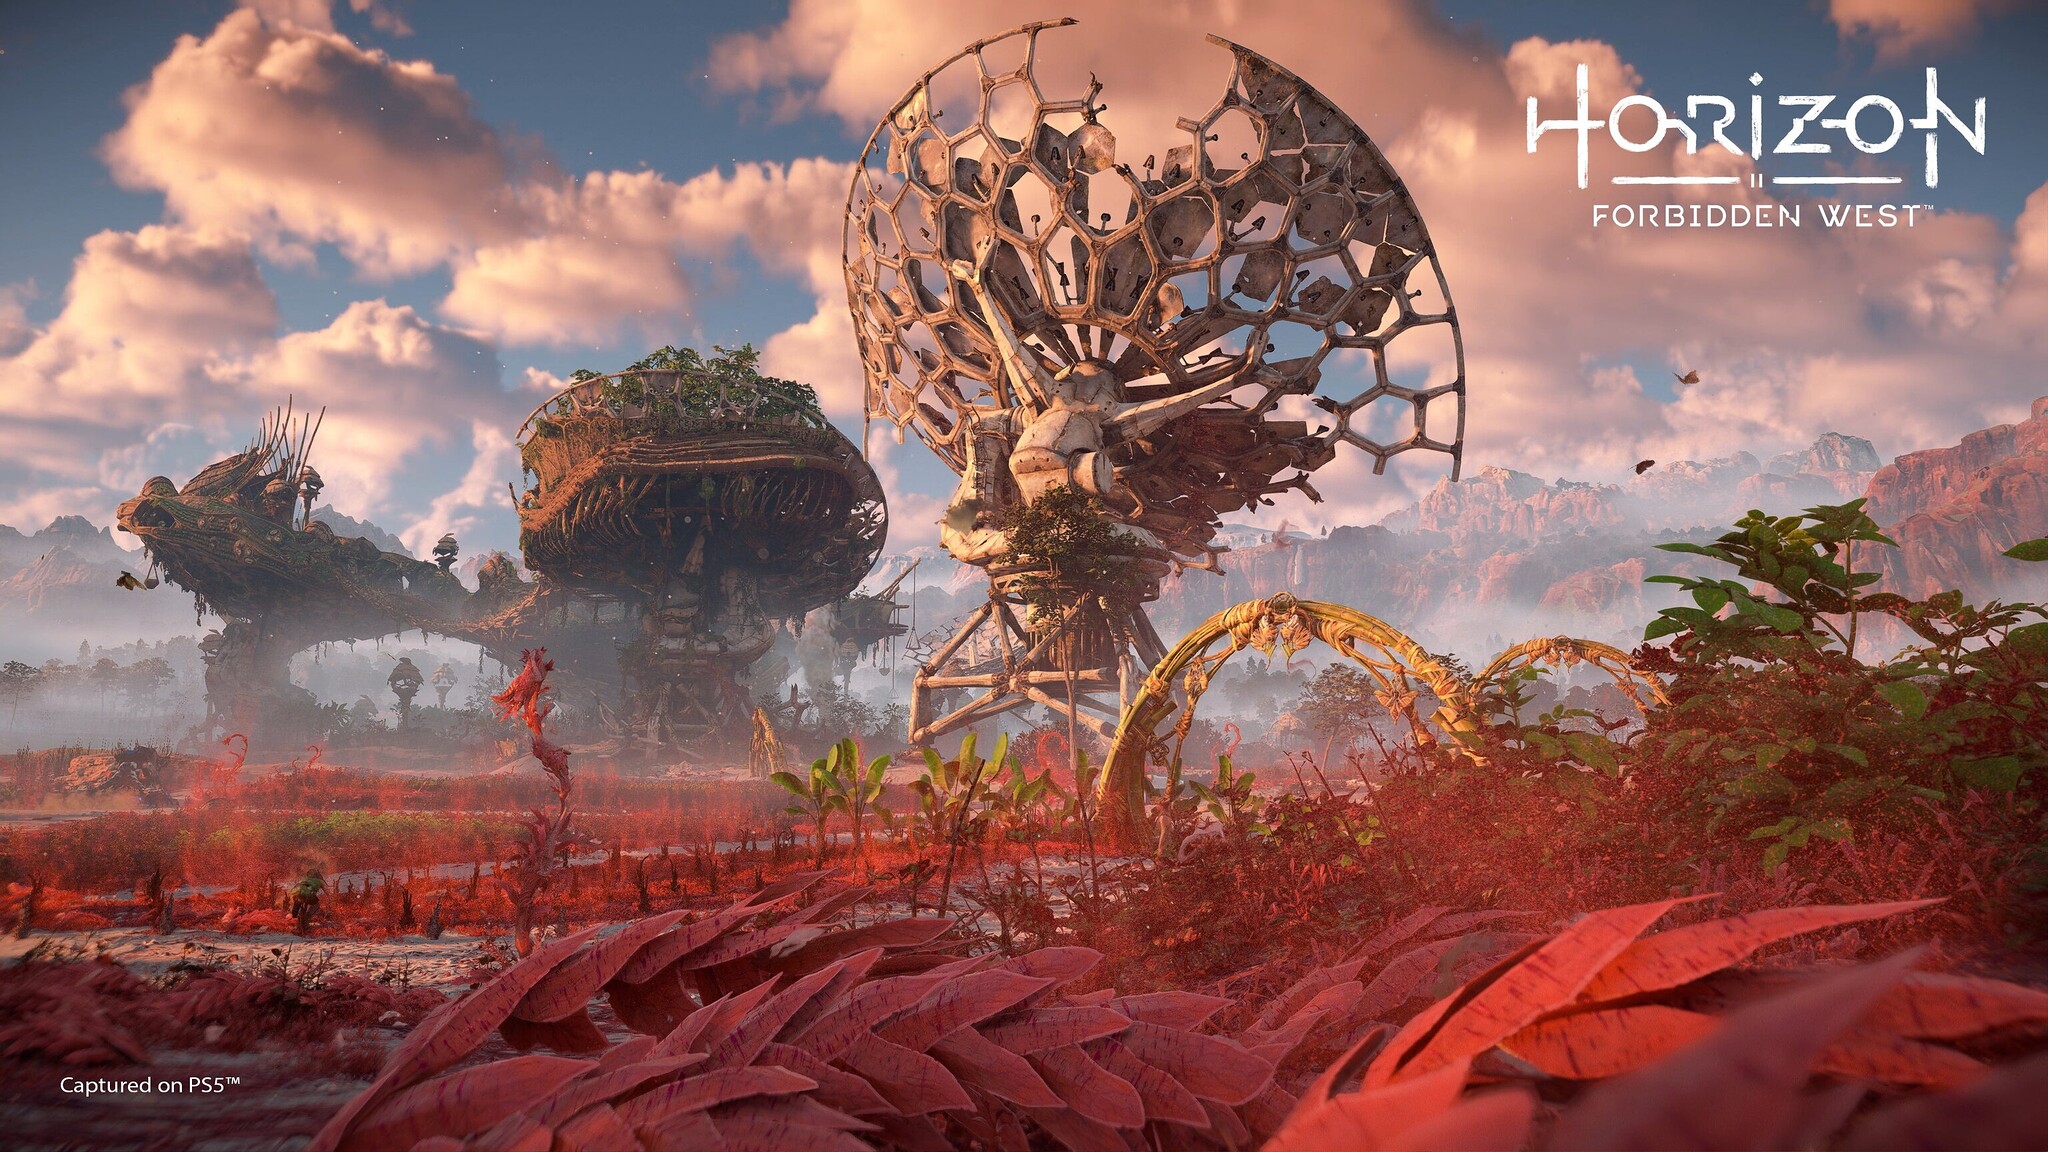 Trailer และ Screenshots ของ Horizon Forbidden West แสดงรายละเอียดของเผ่าใหม่และสภาพแวดล้อมตระการตา